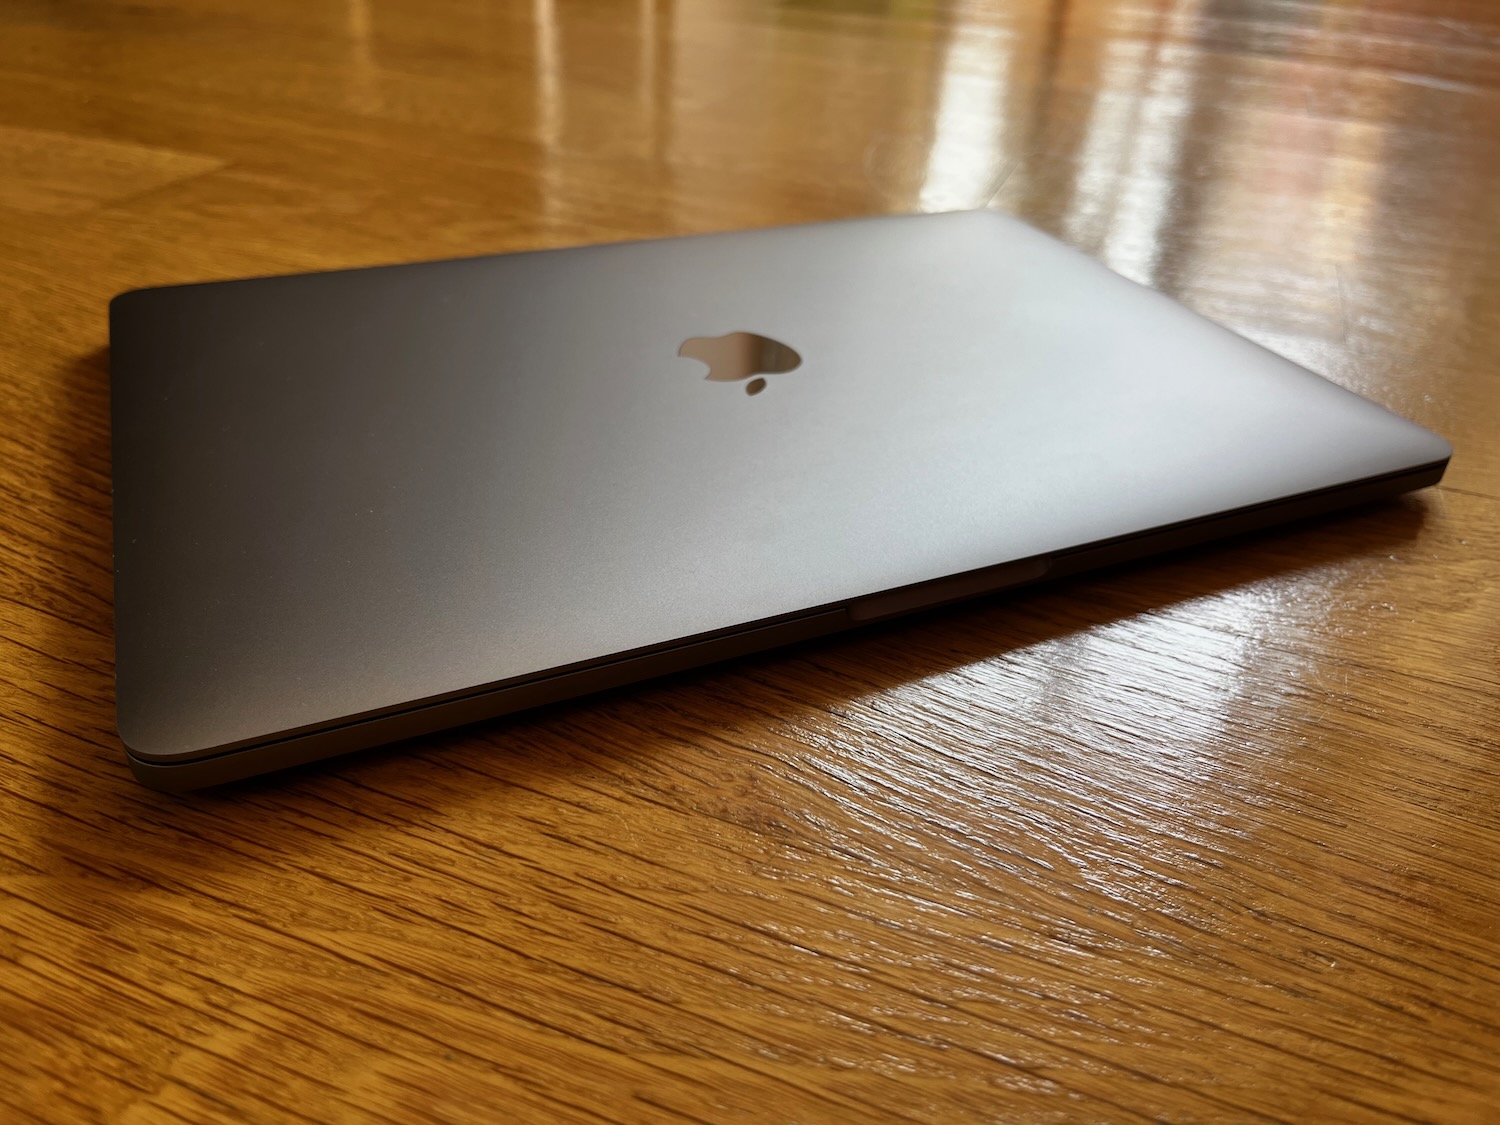 MacBook Pro (13-inch, 2018, 4 Thunderbolt 3 ports)